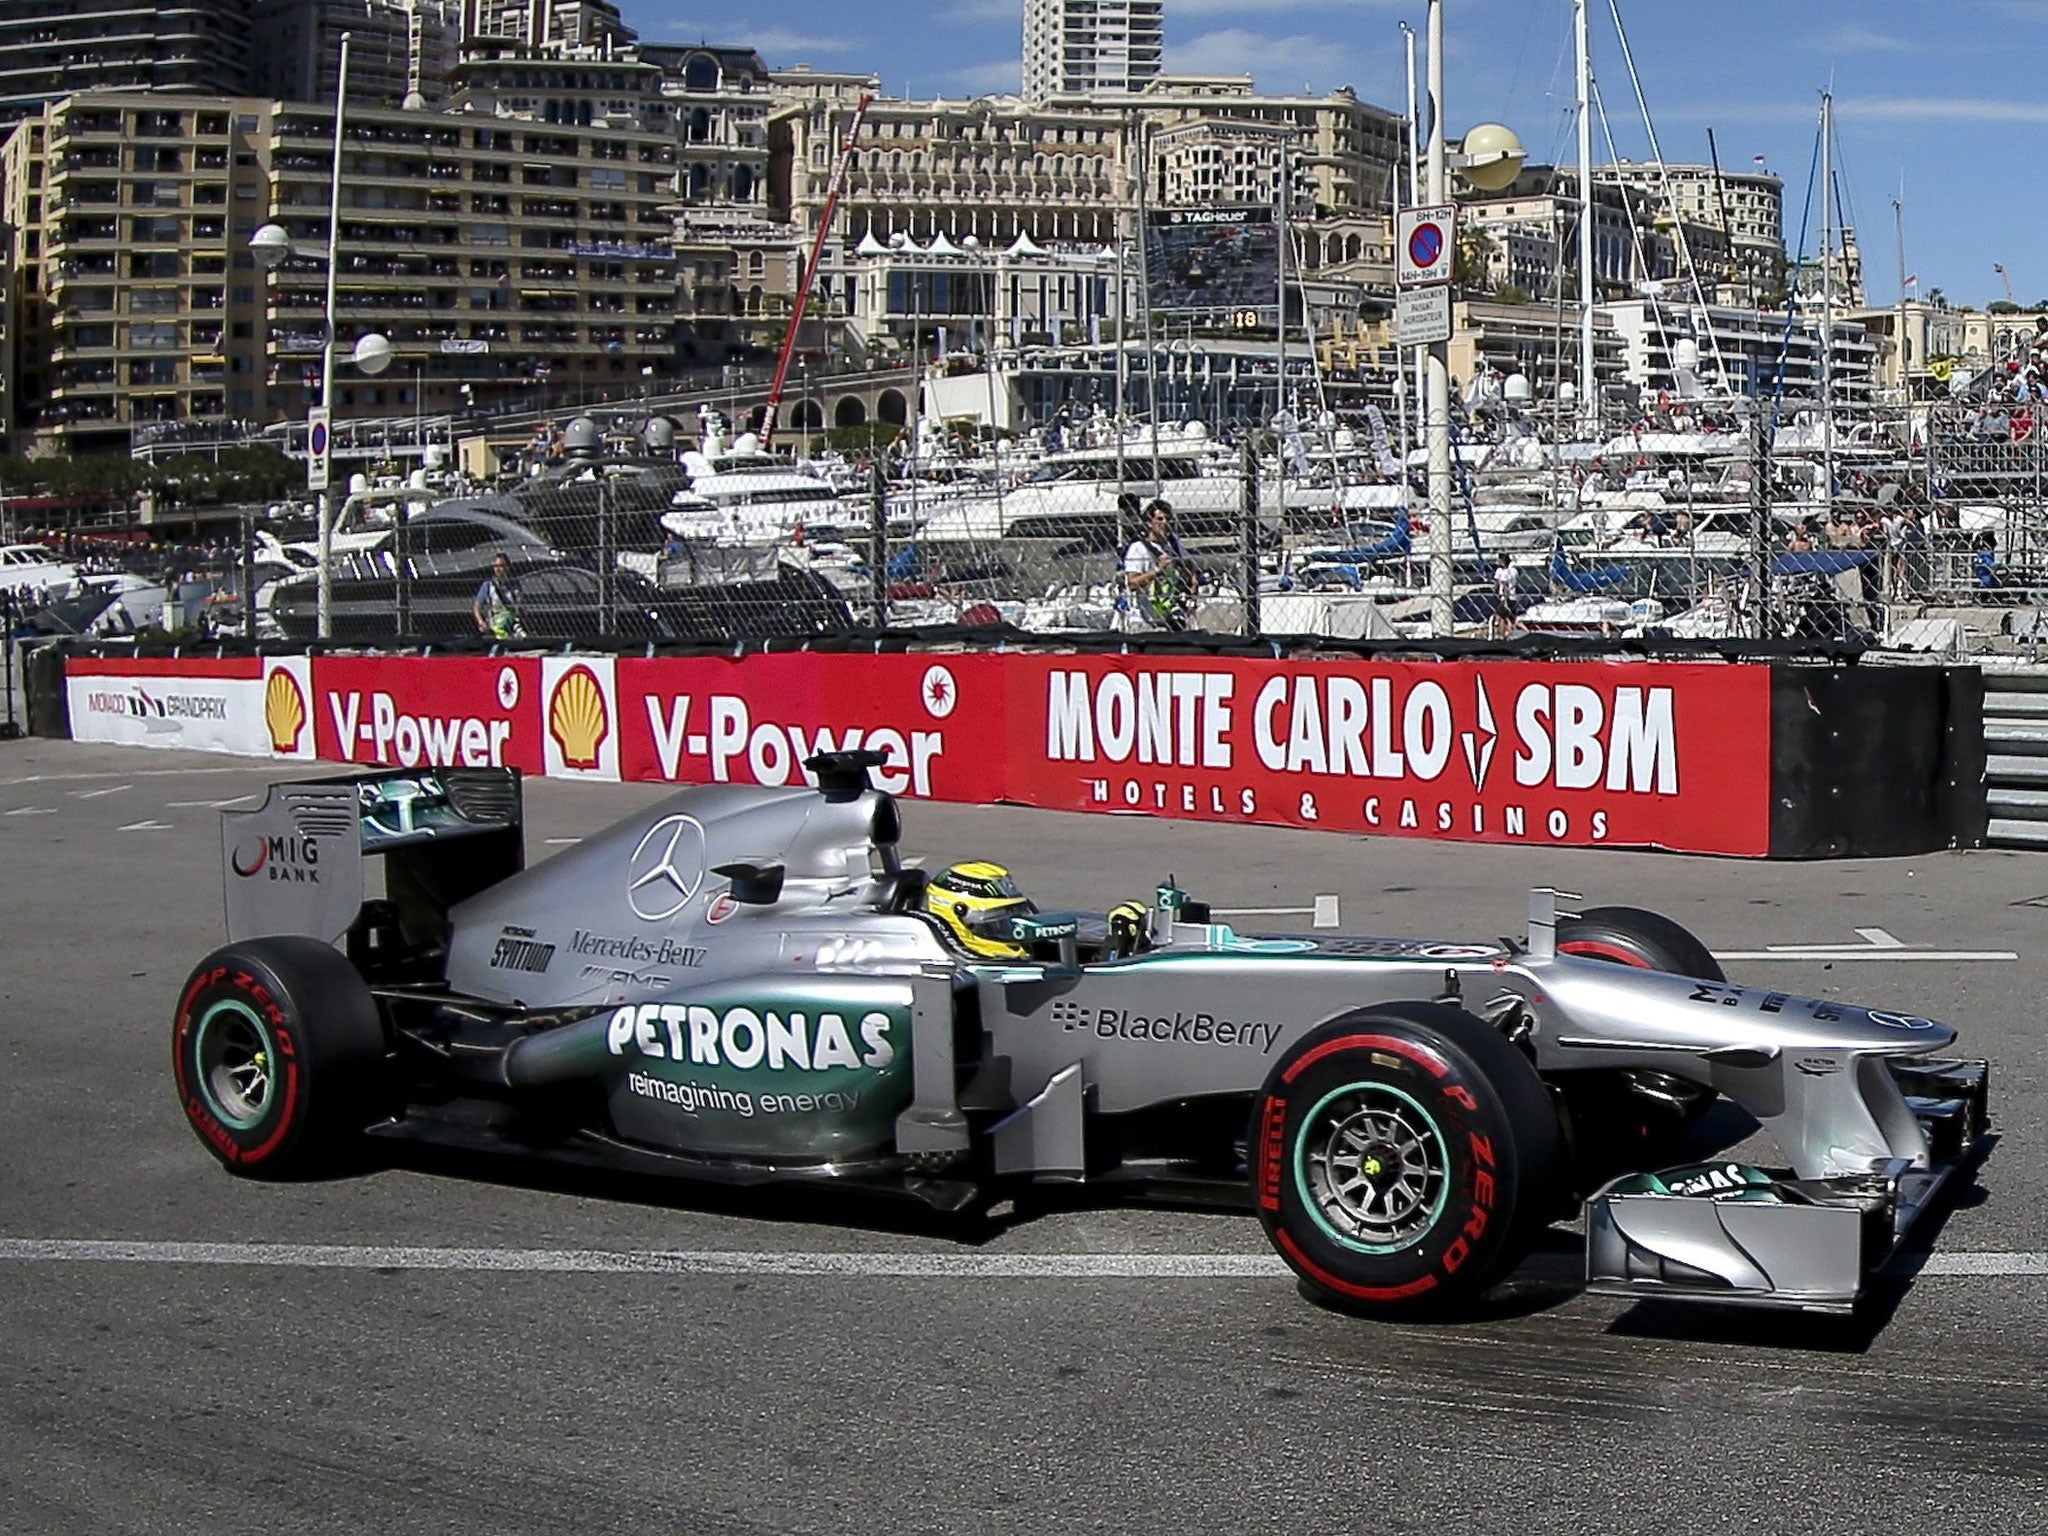 Nico Rosberg on his way to victory